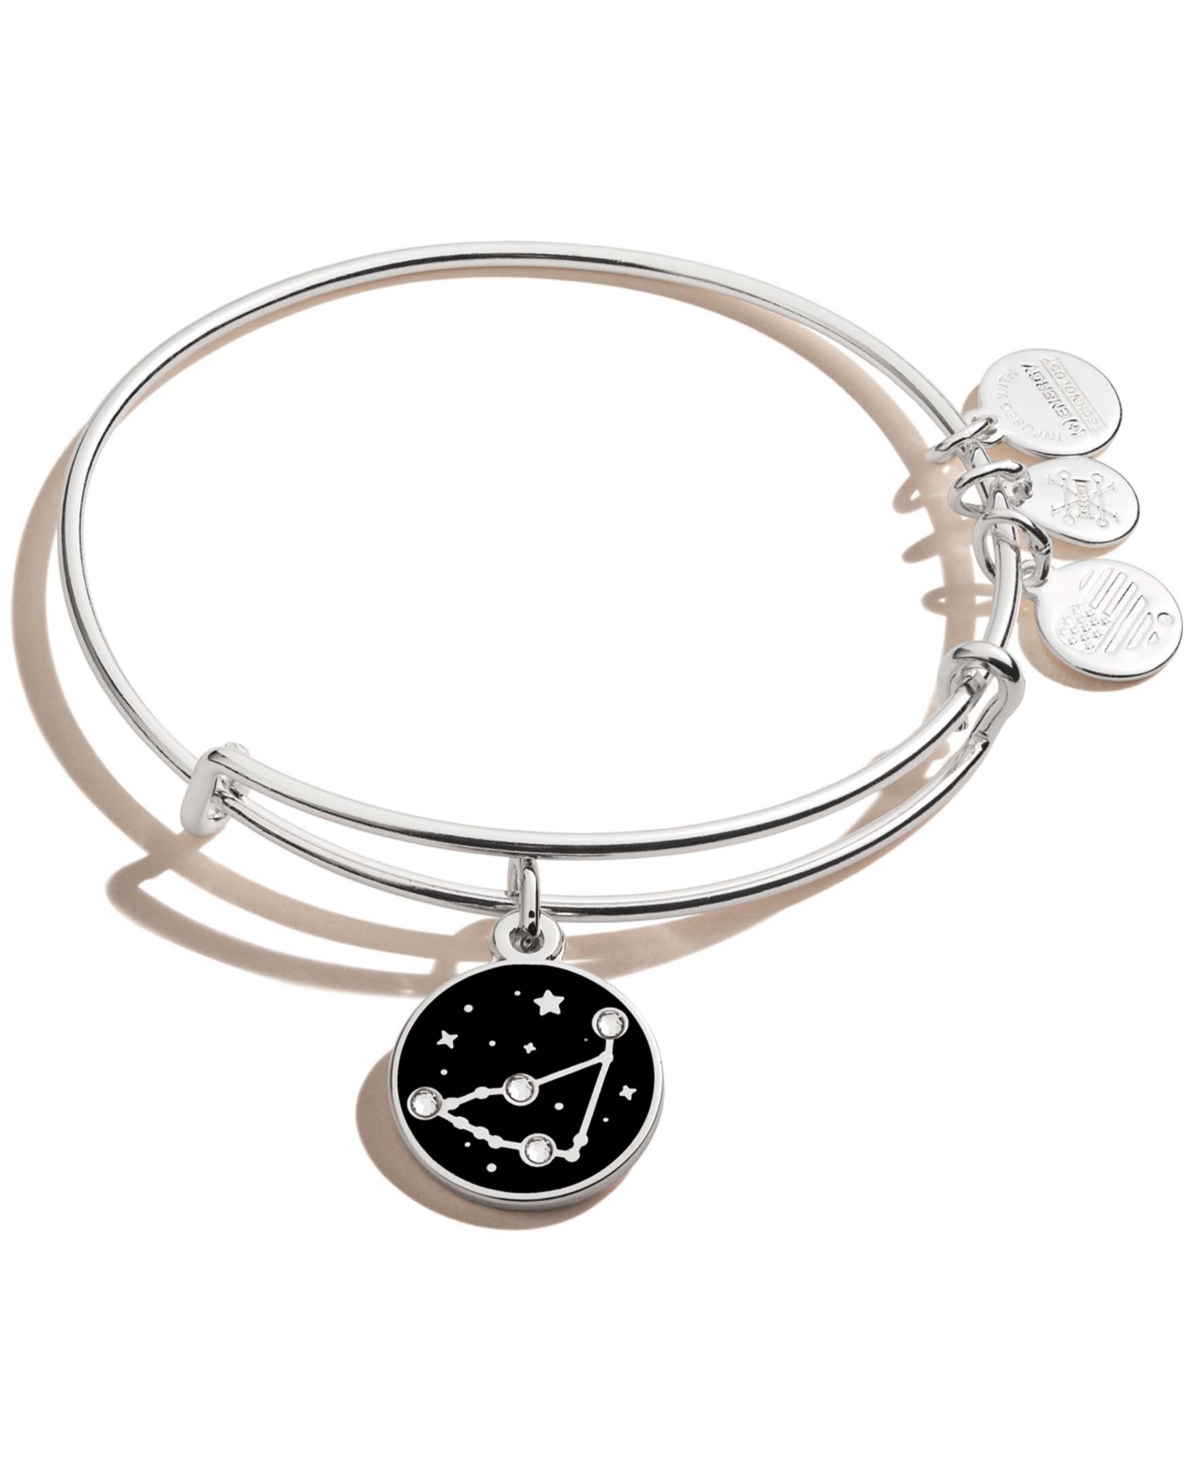 Alex and Ani Silver-Tone Zodiac Charm Bangle Bracelet